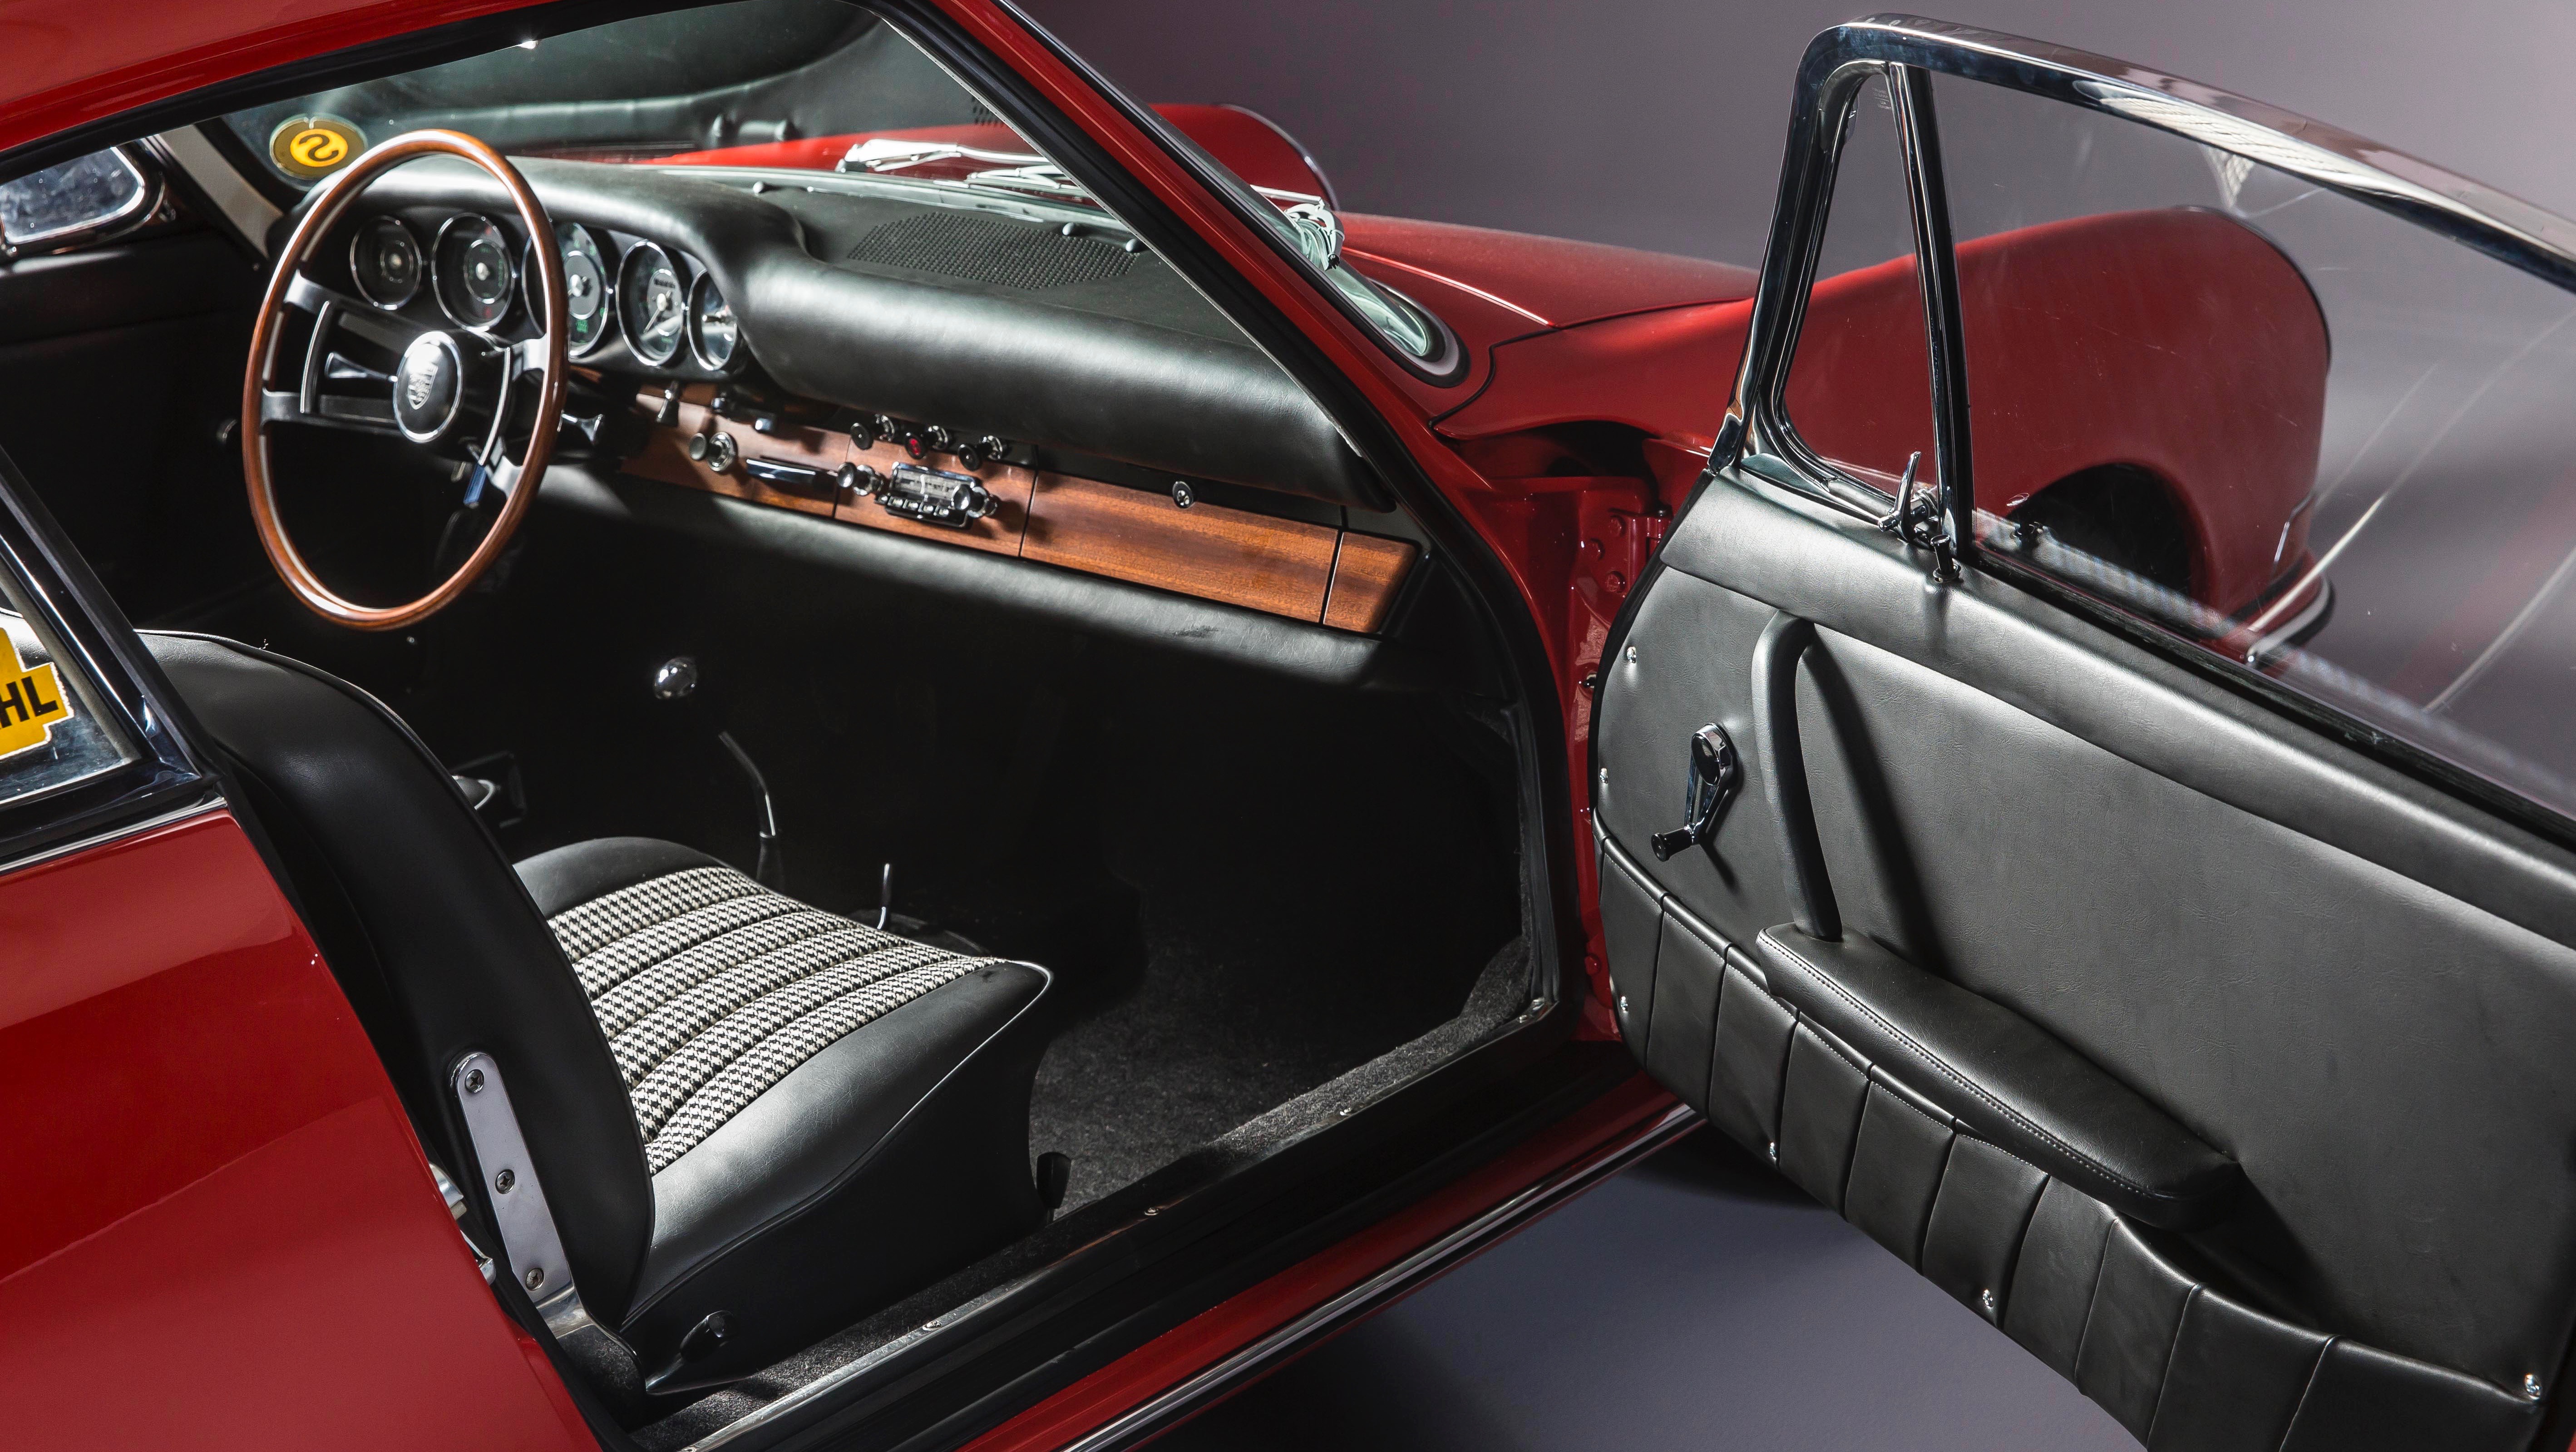 Interior of classic Porsche 911 featuring seats in Pepita cloth